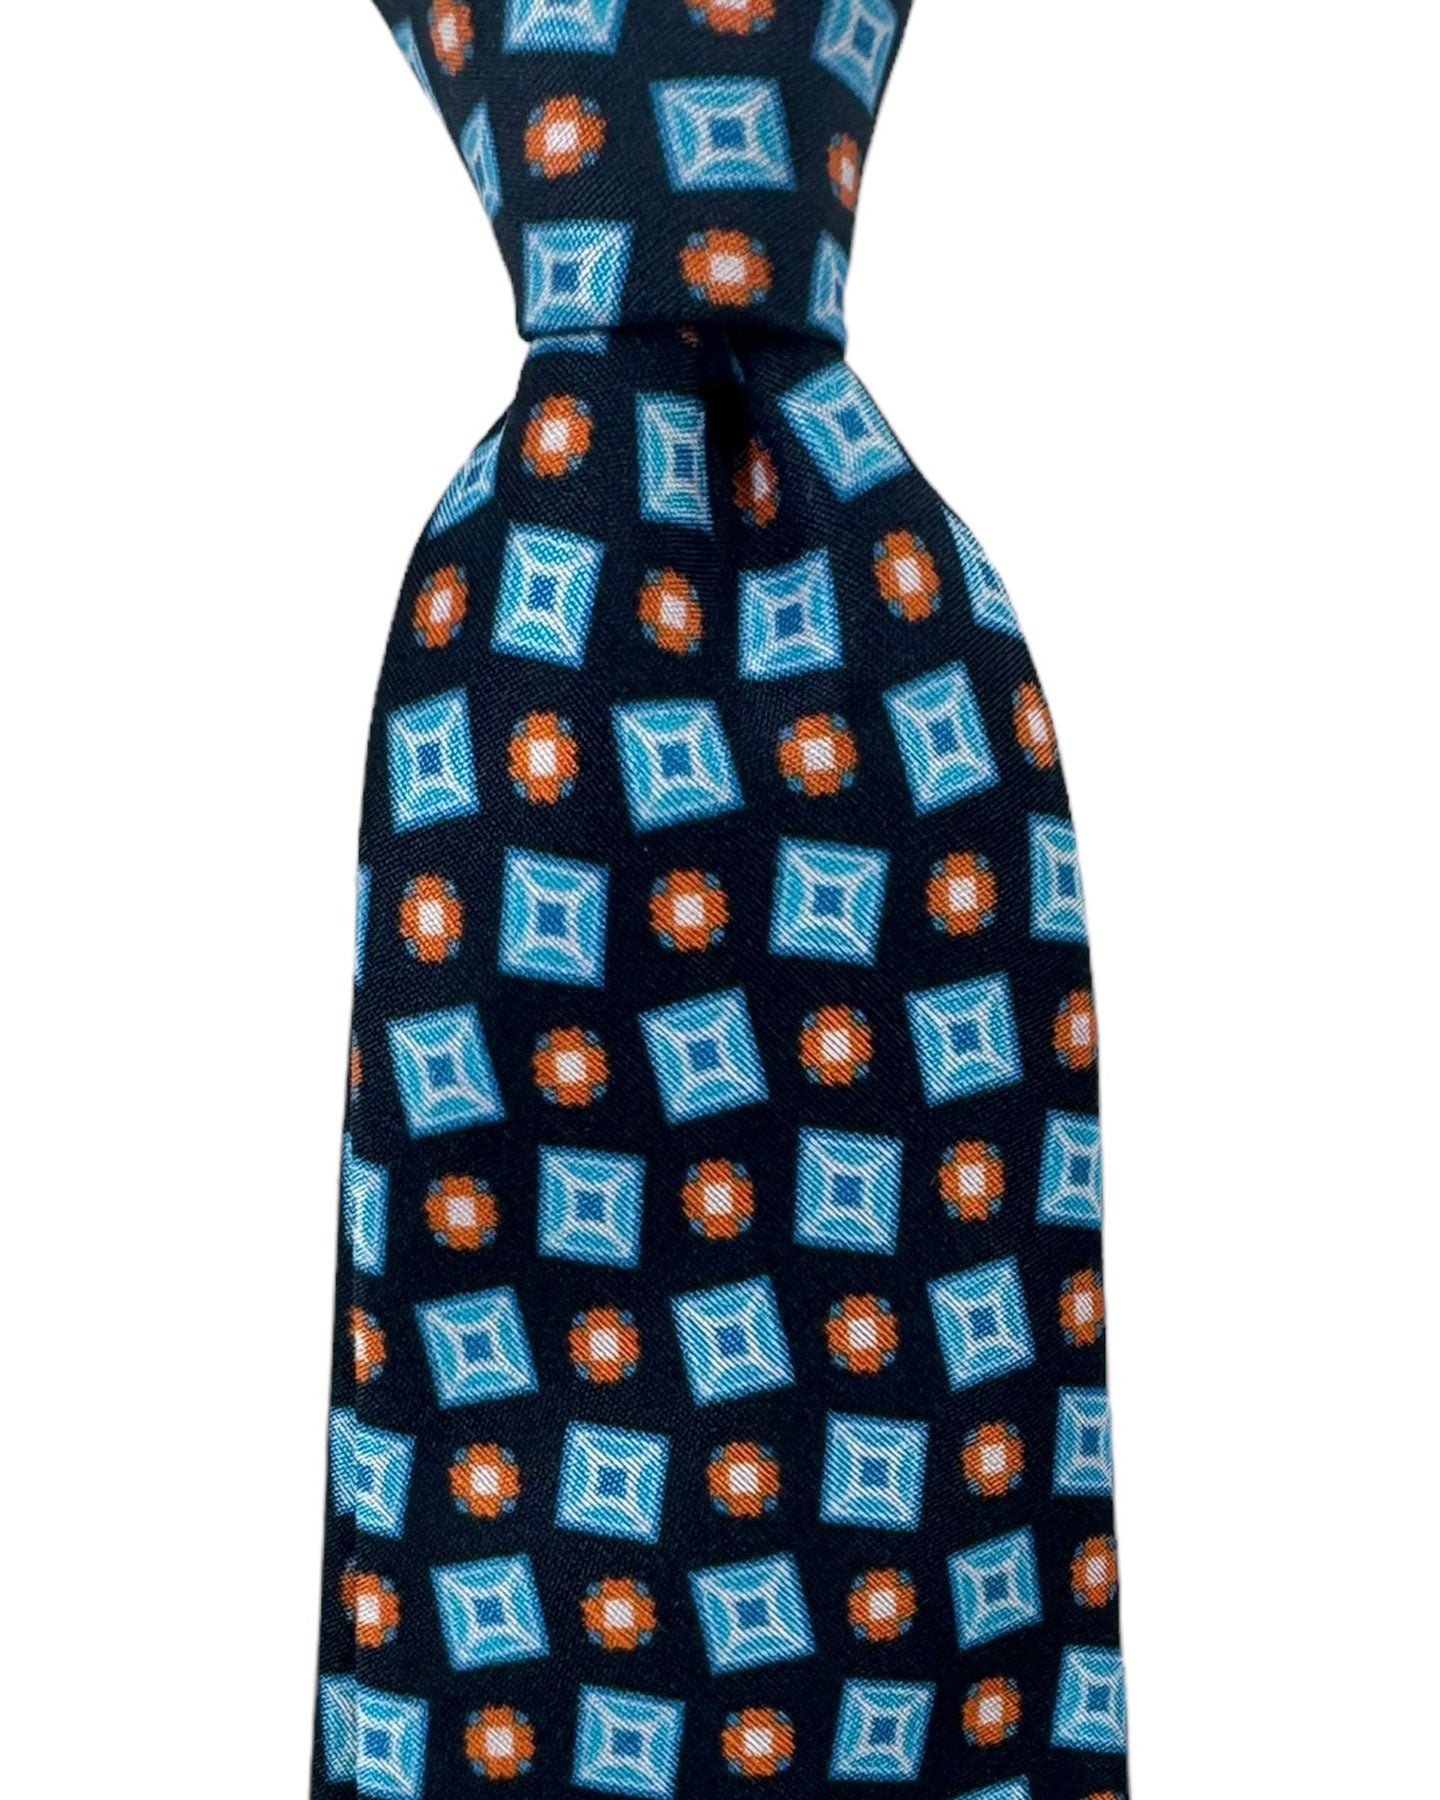 Kiton Tie Black Blue Orange Mini Geometric - Sevenfold Necktie